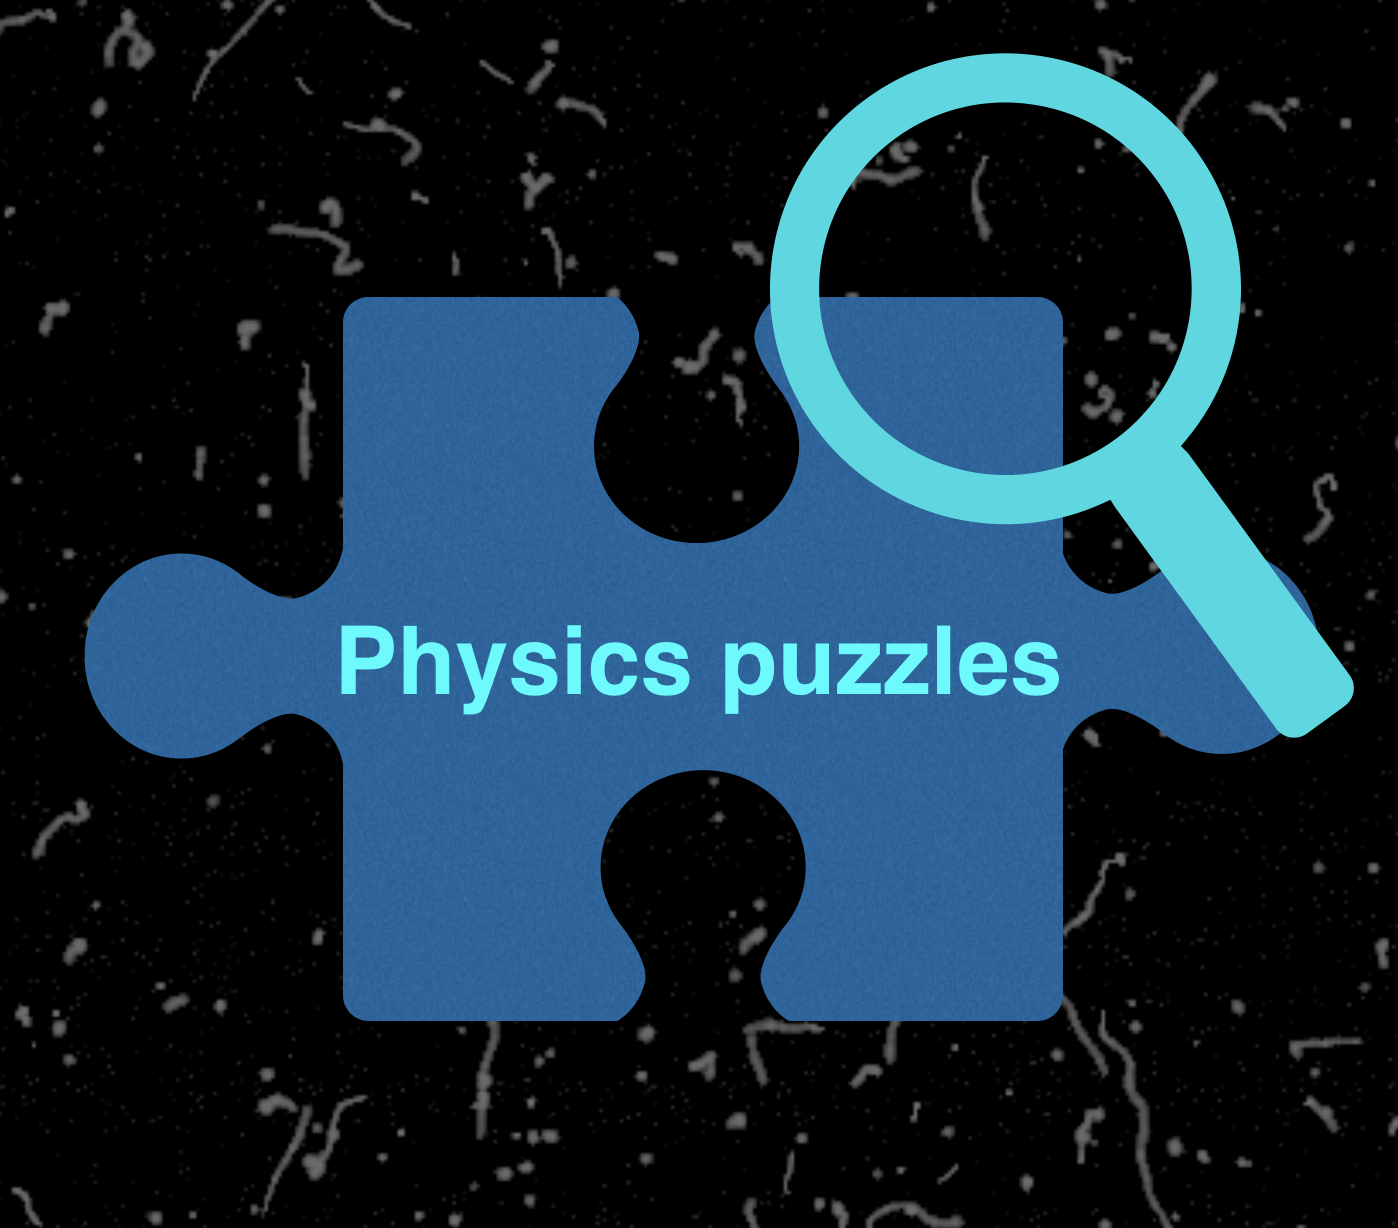 My physics puzzles